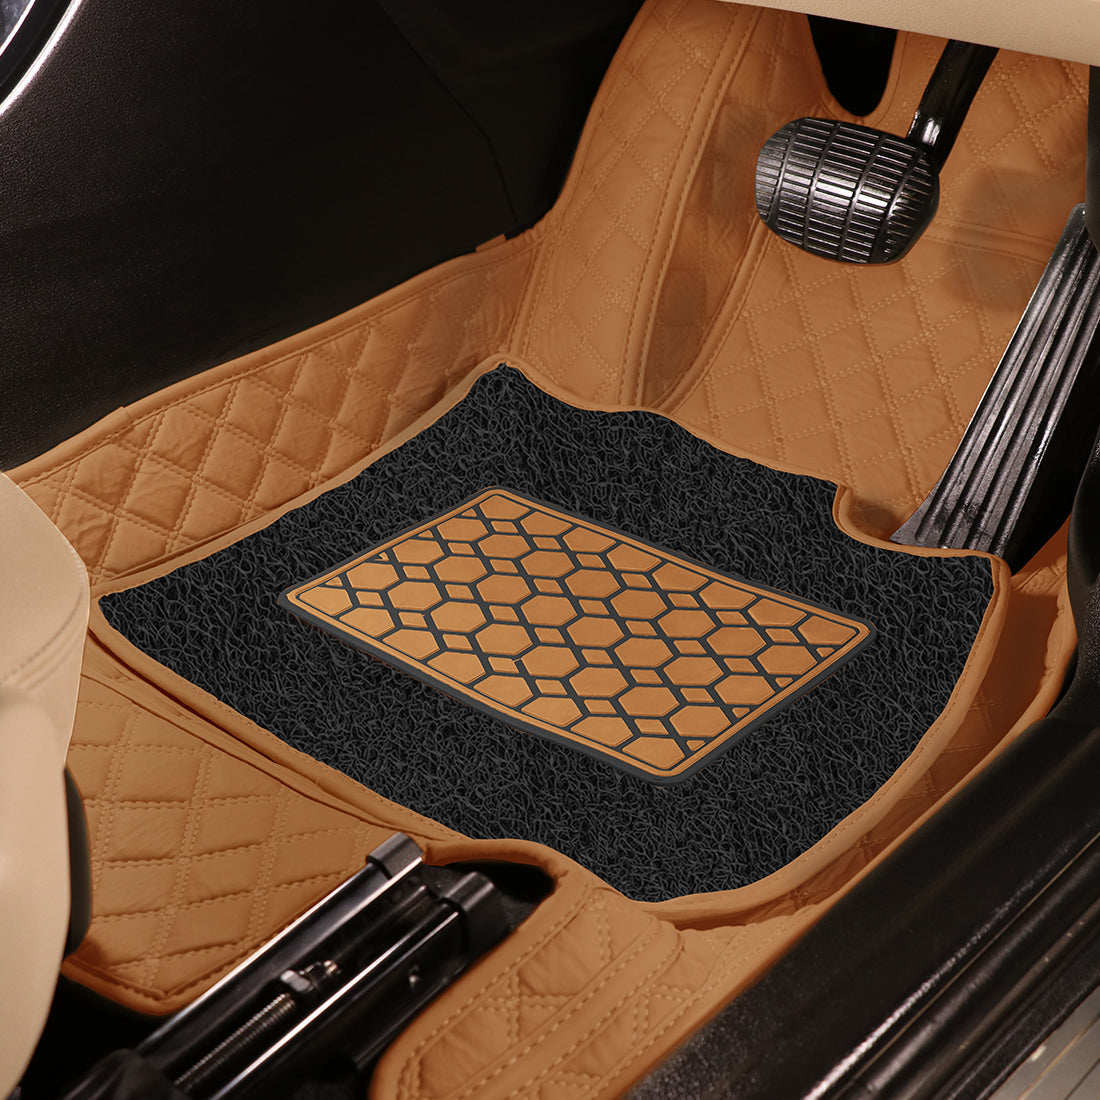 Tata Safari (6 Seater) 2021 7D Luxury Car Mat, All Weather Proof, Anti-Skid, 100% Waterproof & Odorless with Unique Diamond Fish Design (24mm Luxury PU Leather, 2 Rows)